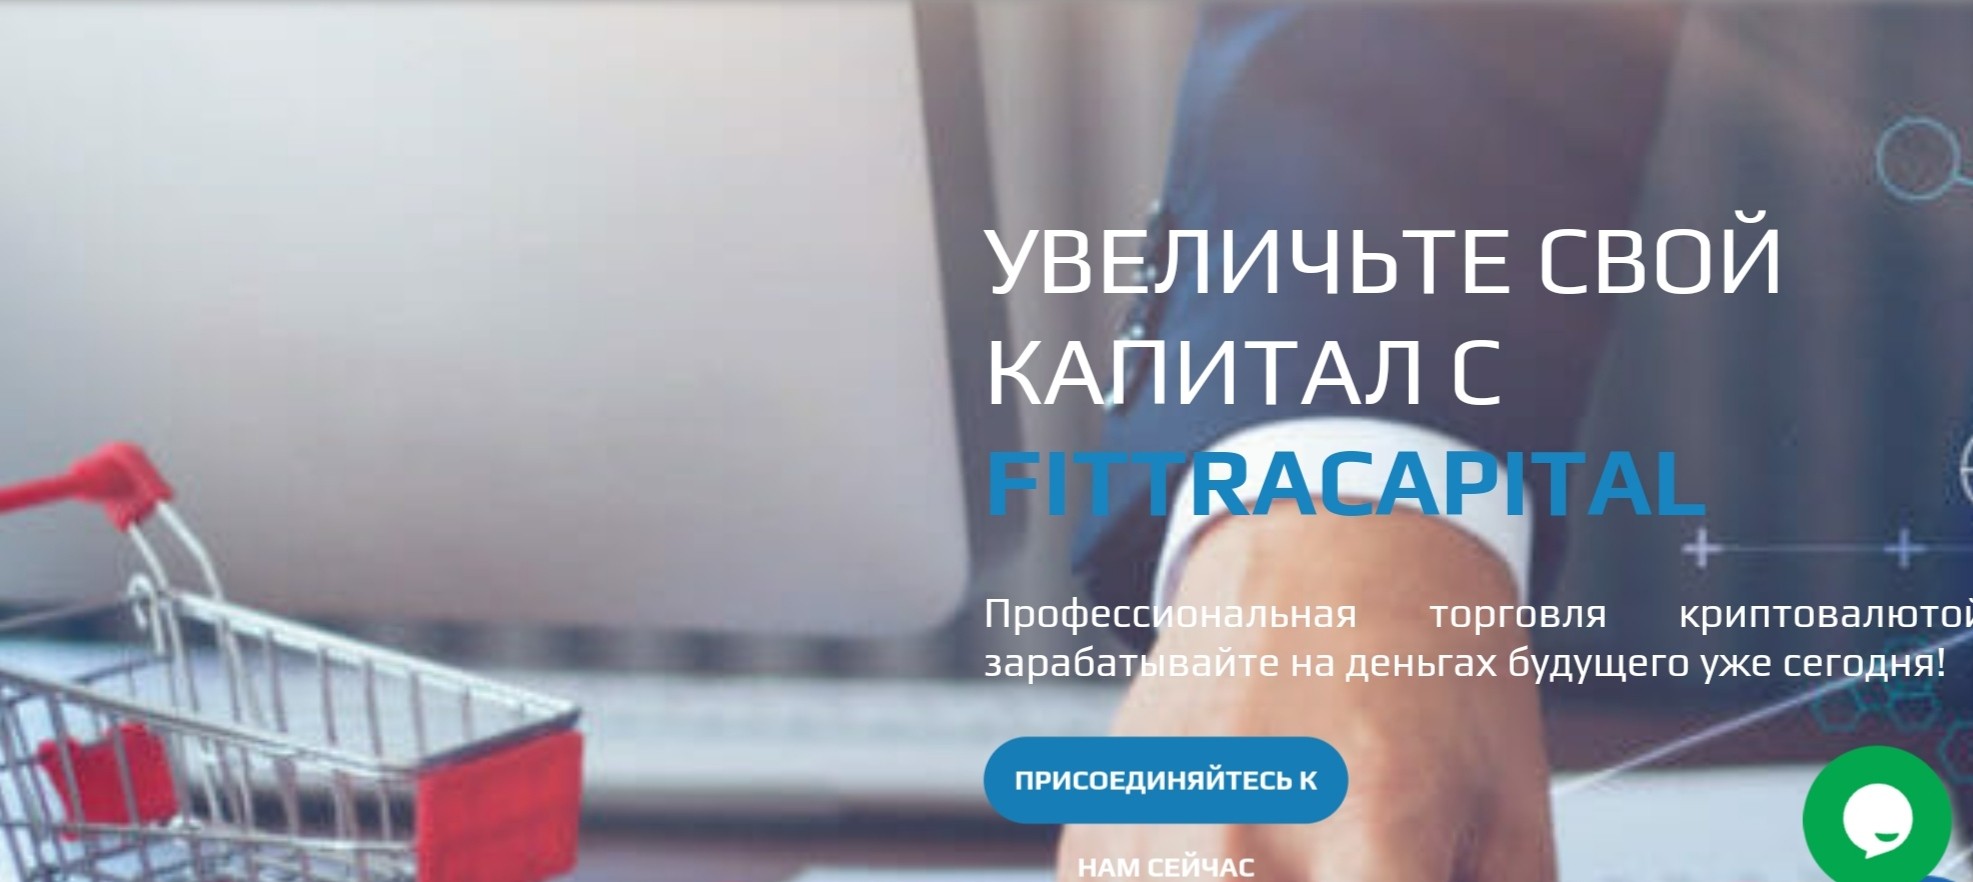 Fittracapital компания сайт обзор